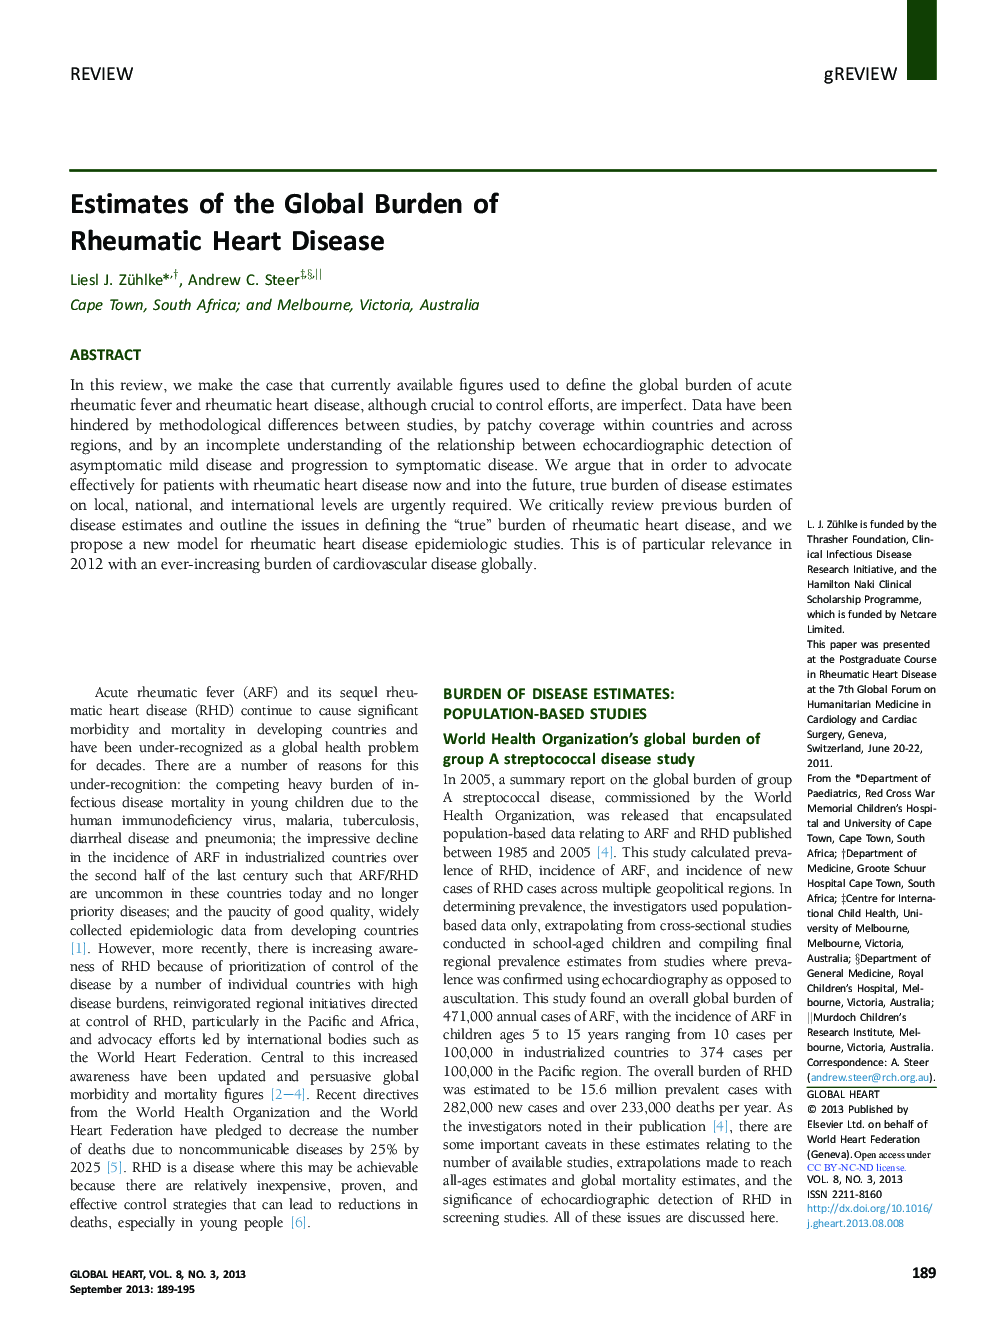 Estimates of the Global Burden of Rheumatic Heart Disease